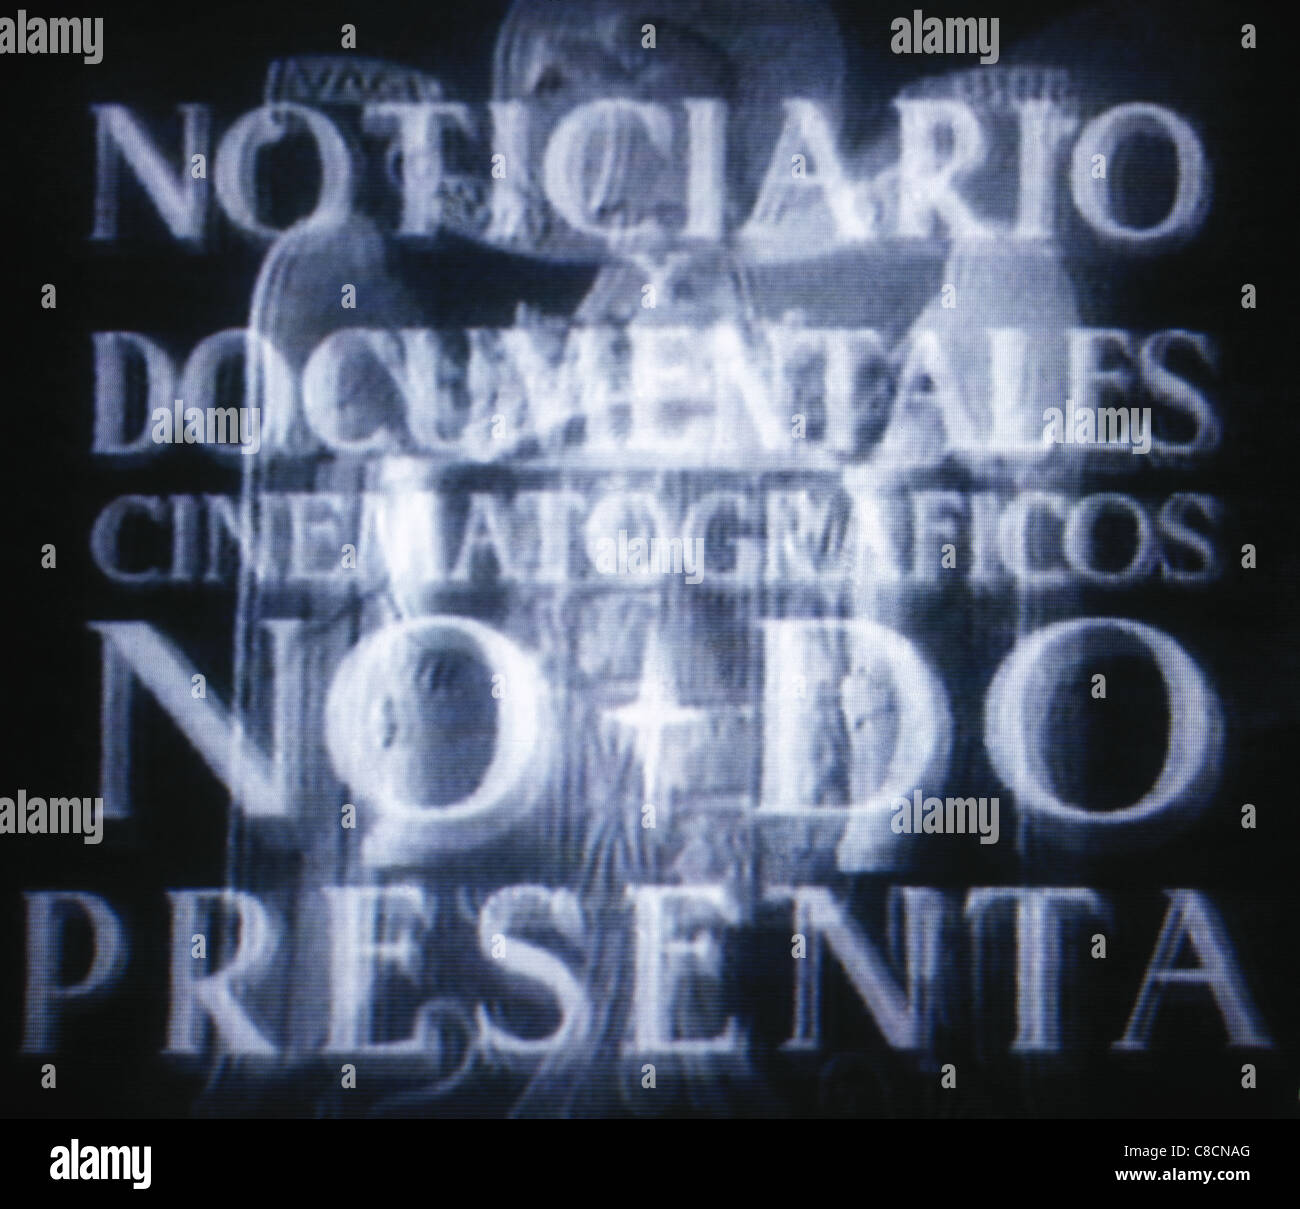 NO-DO. Franco Regime news and documentaries. Spain. Stock Photo